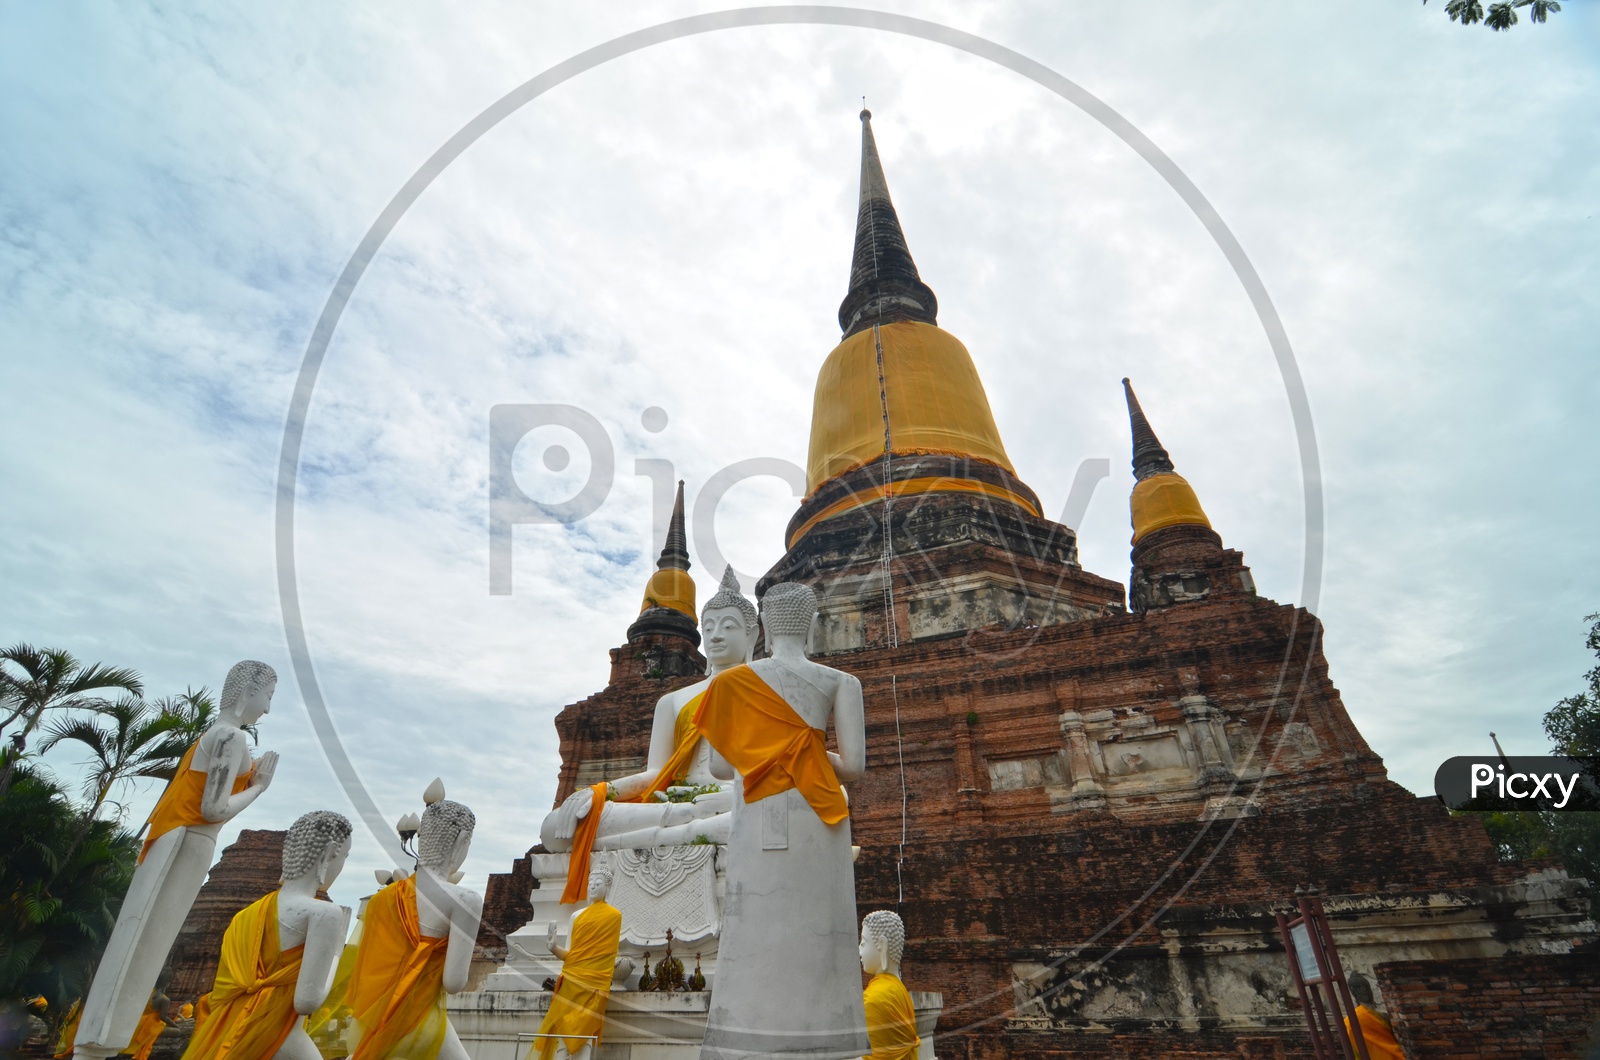 Temple Shrines Or Pagodas with Buddha statues at the temple of Wat Yai Chai Mongkol in Ayutthaya near Bangkok, Thailand